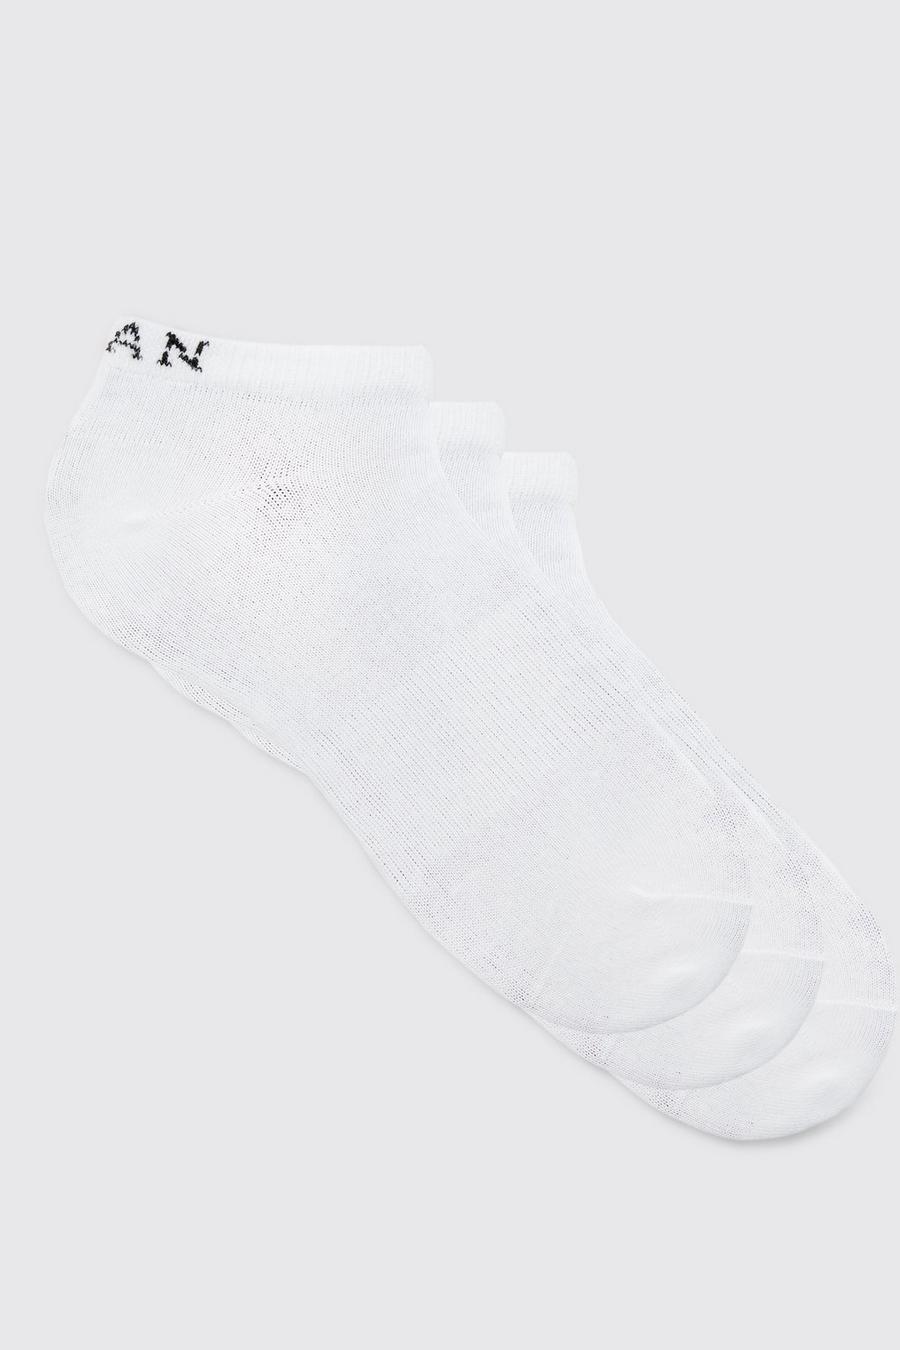 Pack de 3 pares de calcetines MAN deportivos, White